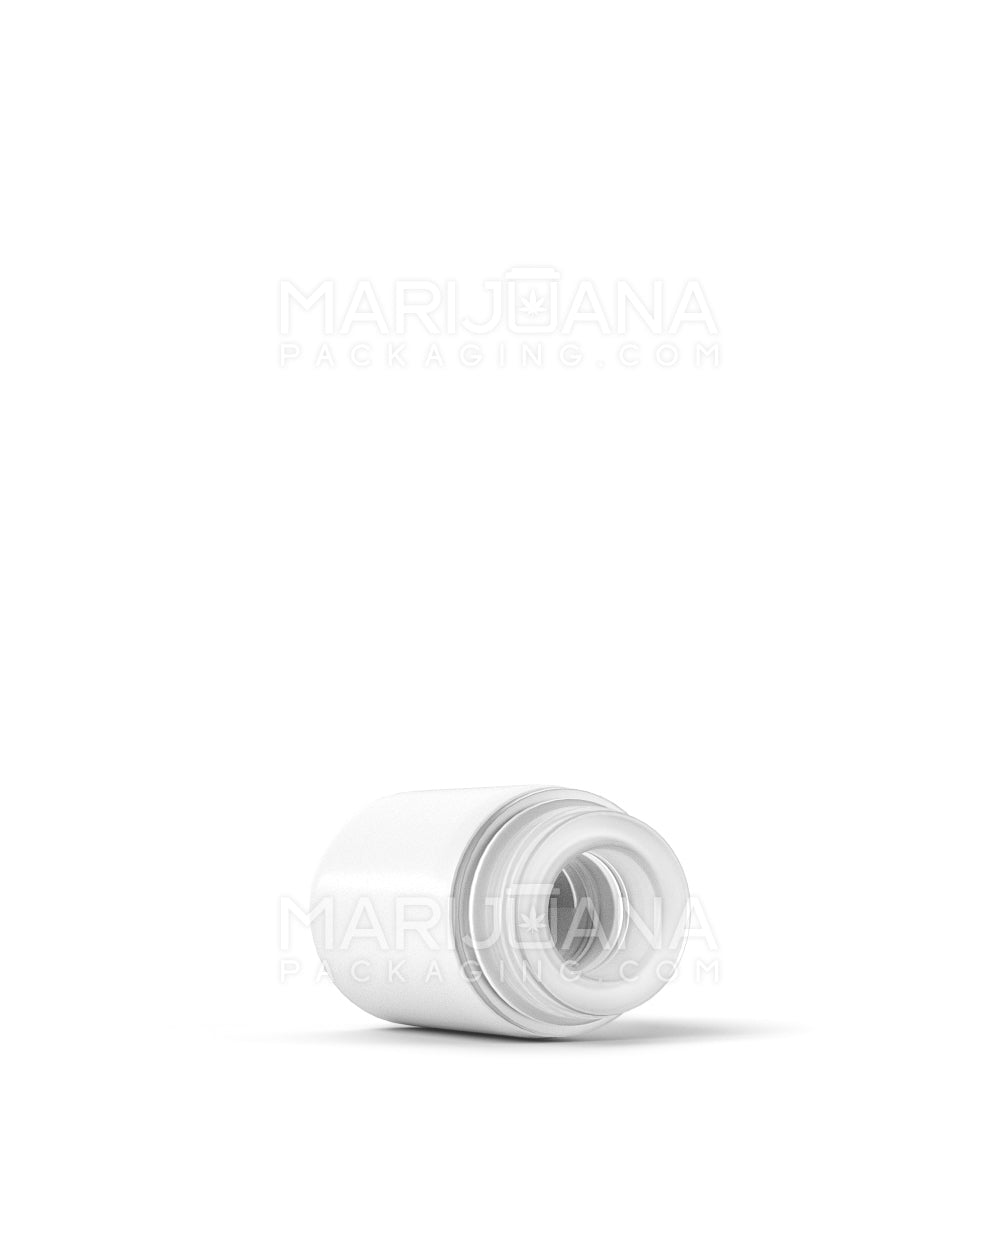 AVD | Barrel Vape Mouthpiece for Glass Cartridges | White Ceramic - Eazy Press - 600 Count - 6